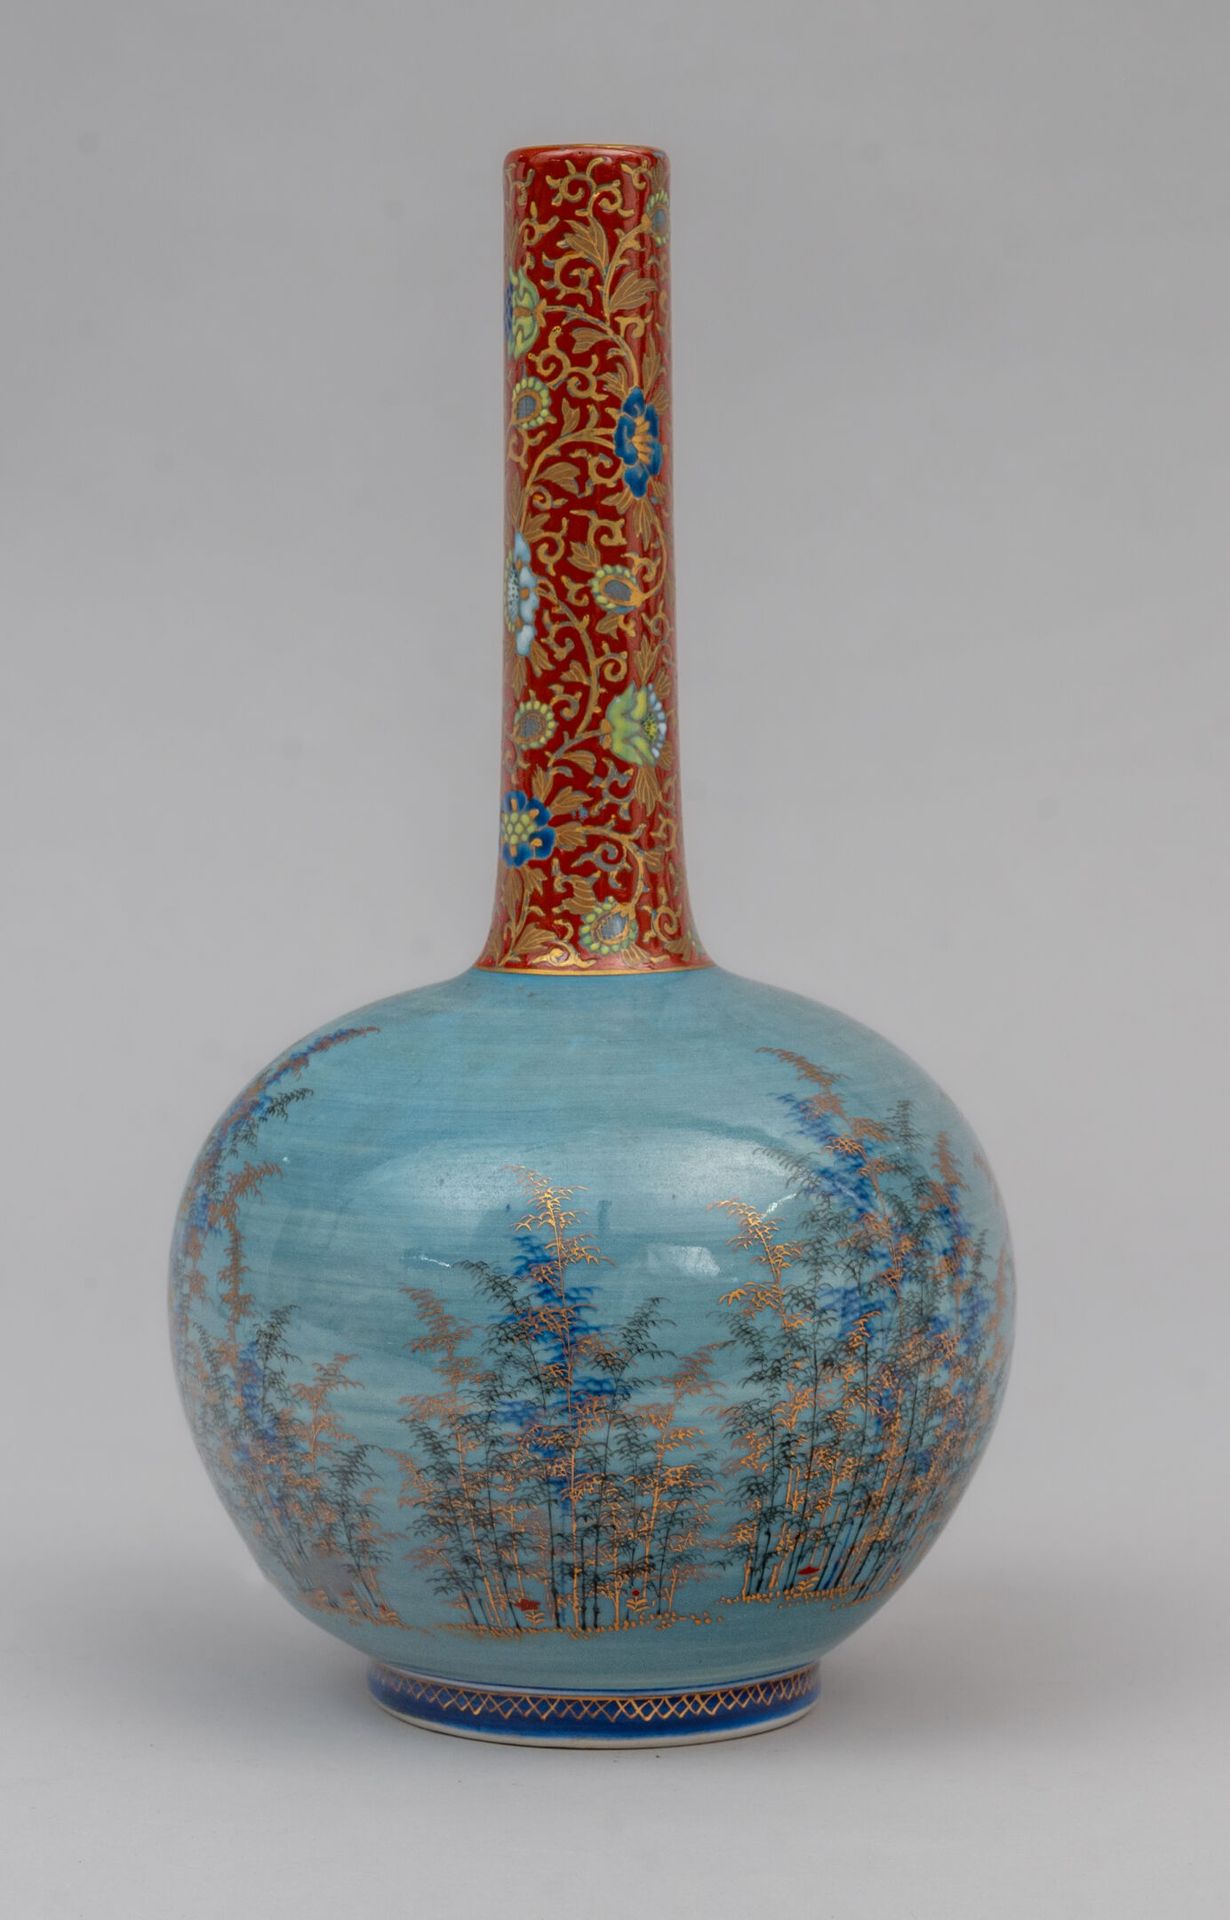 Null 瓷瓶花瓶，日本，明治时期（1868-1912 年）
球形瓶身在浅蓝色背景上饰有金色、钴蓝色和绿色竹子的珐琅装饰，狭长的瓶颈在红色背景上饰有金色花卷，底&hellip;